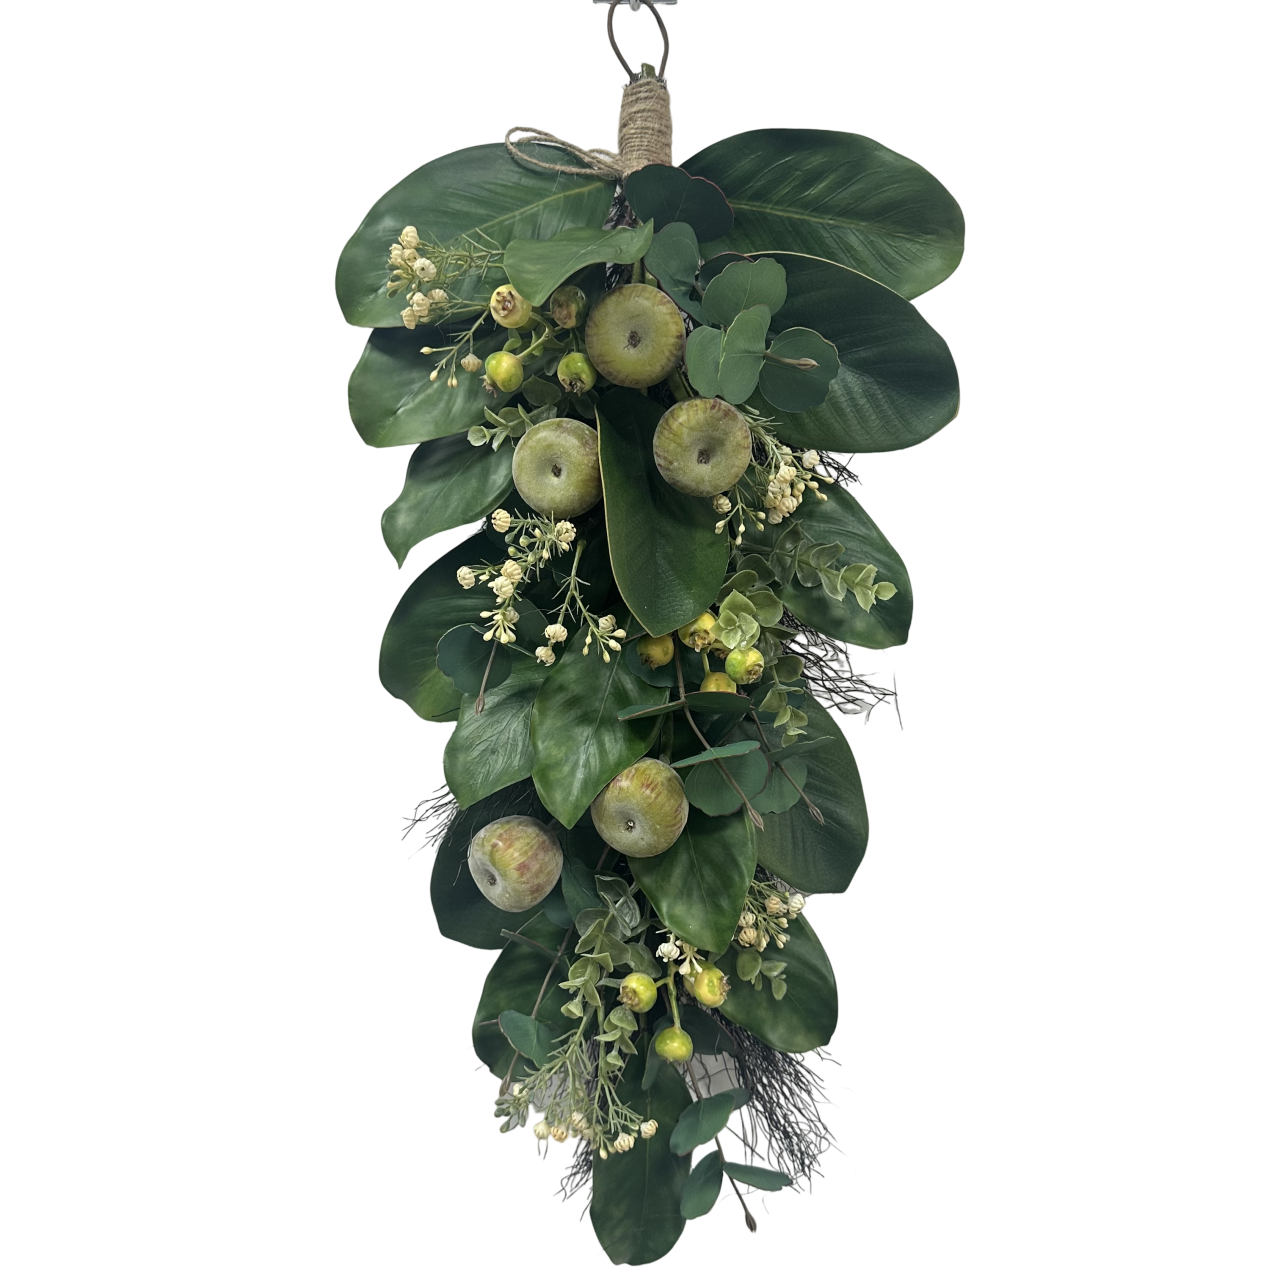 Senmasine ghirlanda artificiale mista mela fico foglie verdi ghirlande primaverili decorazione da appendere alla porta d'ingresso